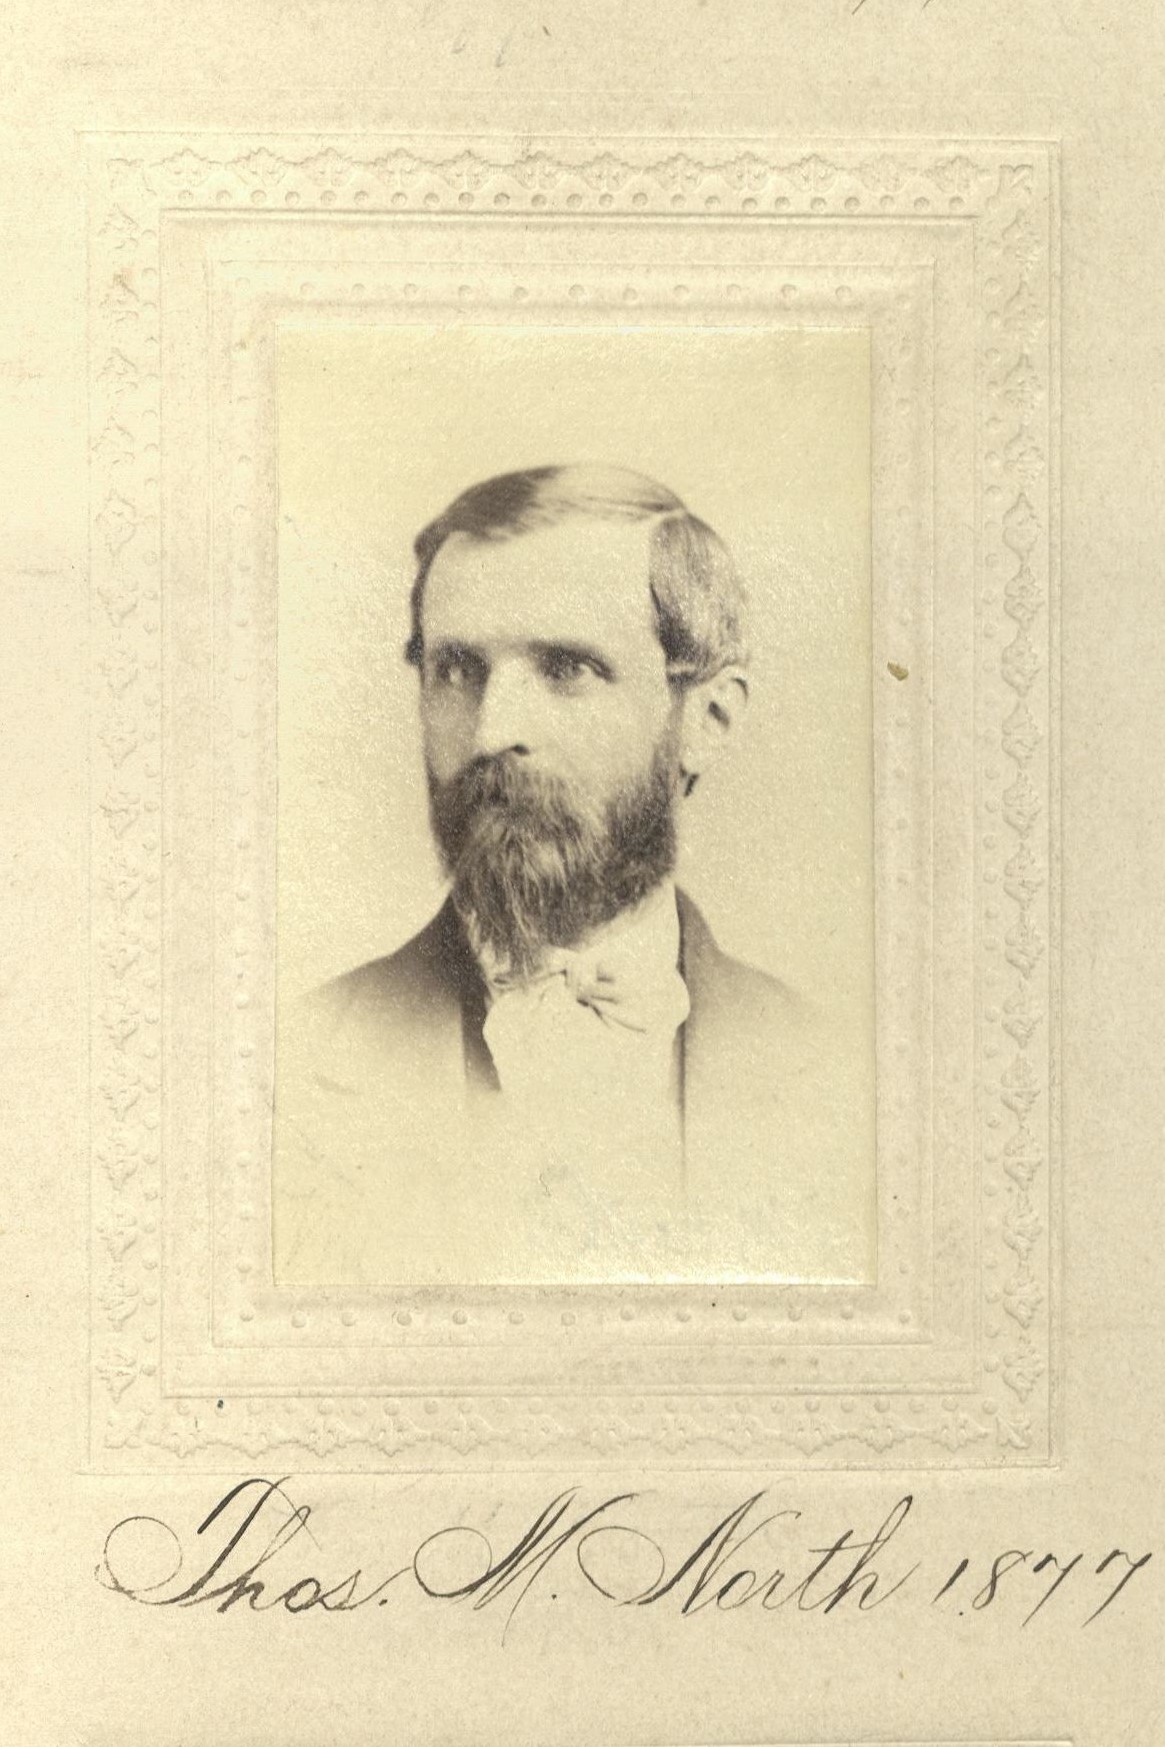 Member portrait of Thomas M. North